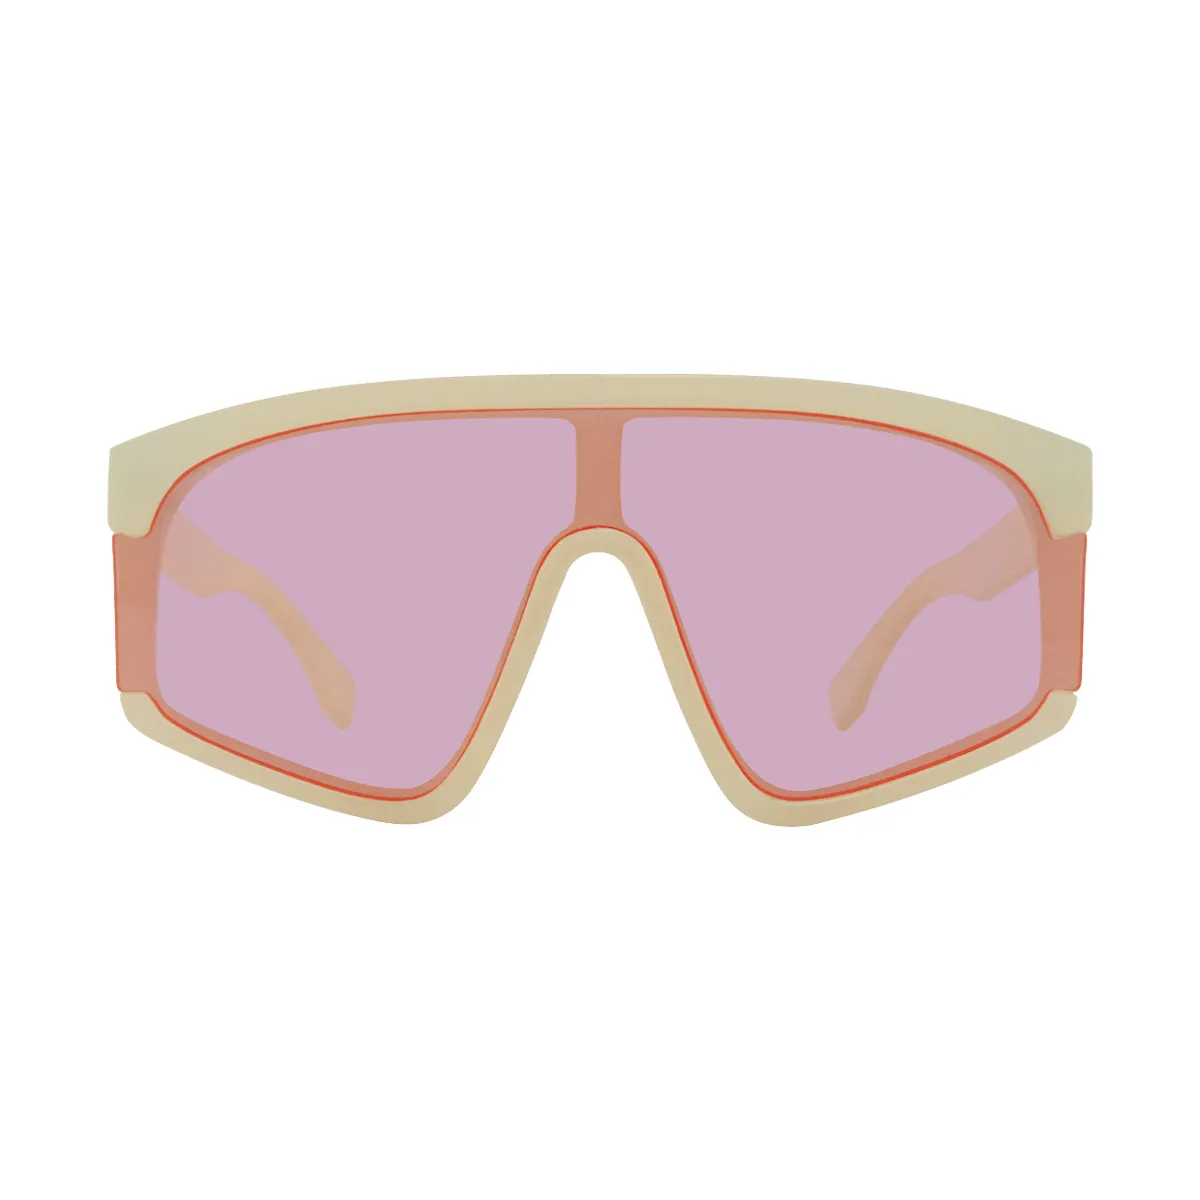 Morgan - glasses Bright-DeepJelly-Light-Pink Sunglasses for Men & Women